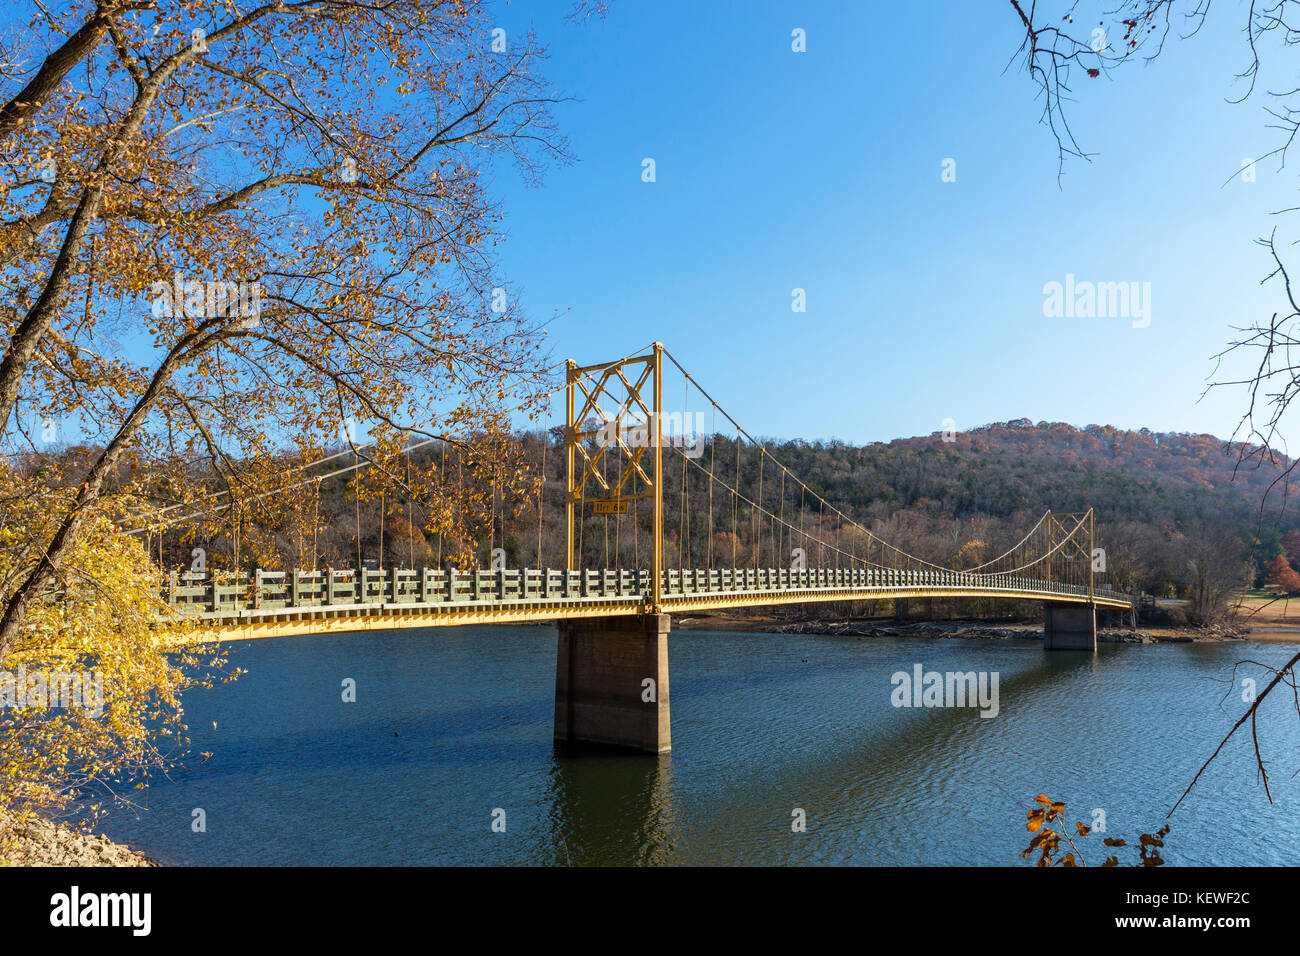 Castoro storico ponte sopra il Fiume Bianco, Table Rock Lake, castoro, monti Ozark, Arkansas, STATI UNITI D'AMERICA Foto Stock